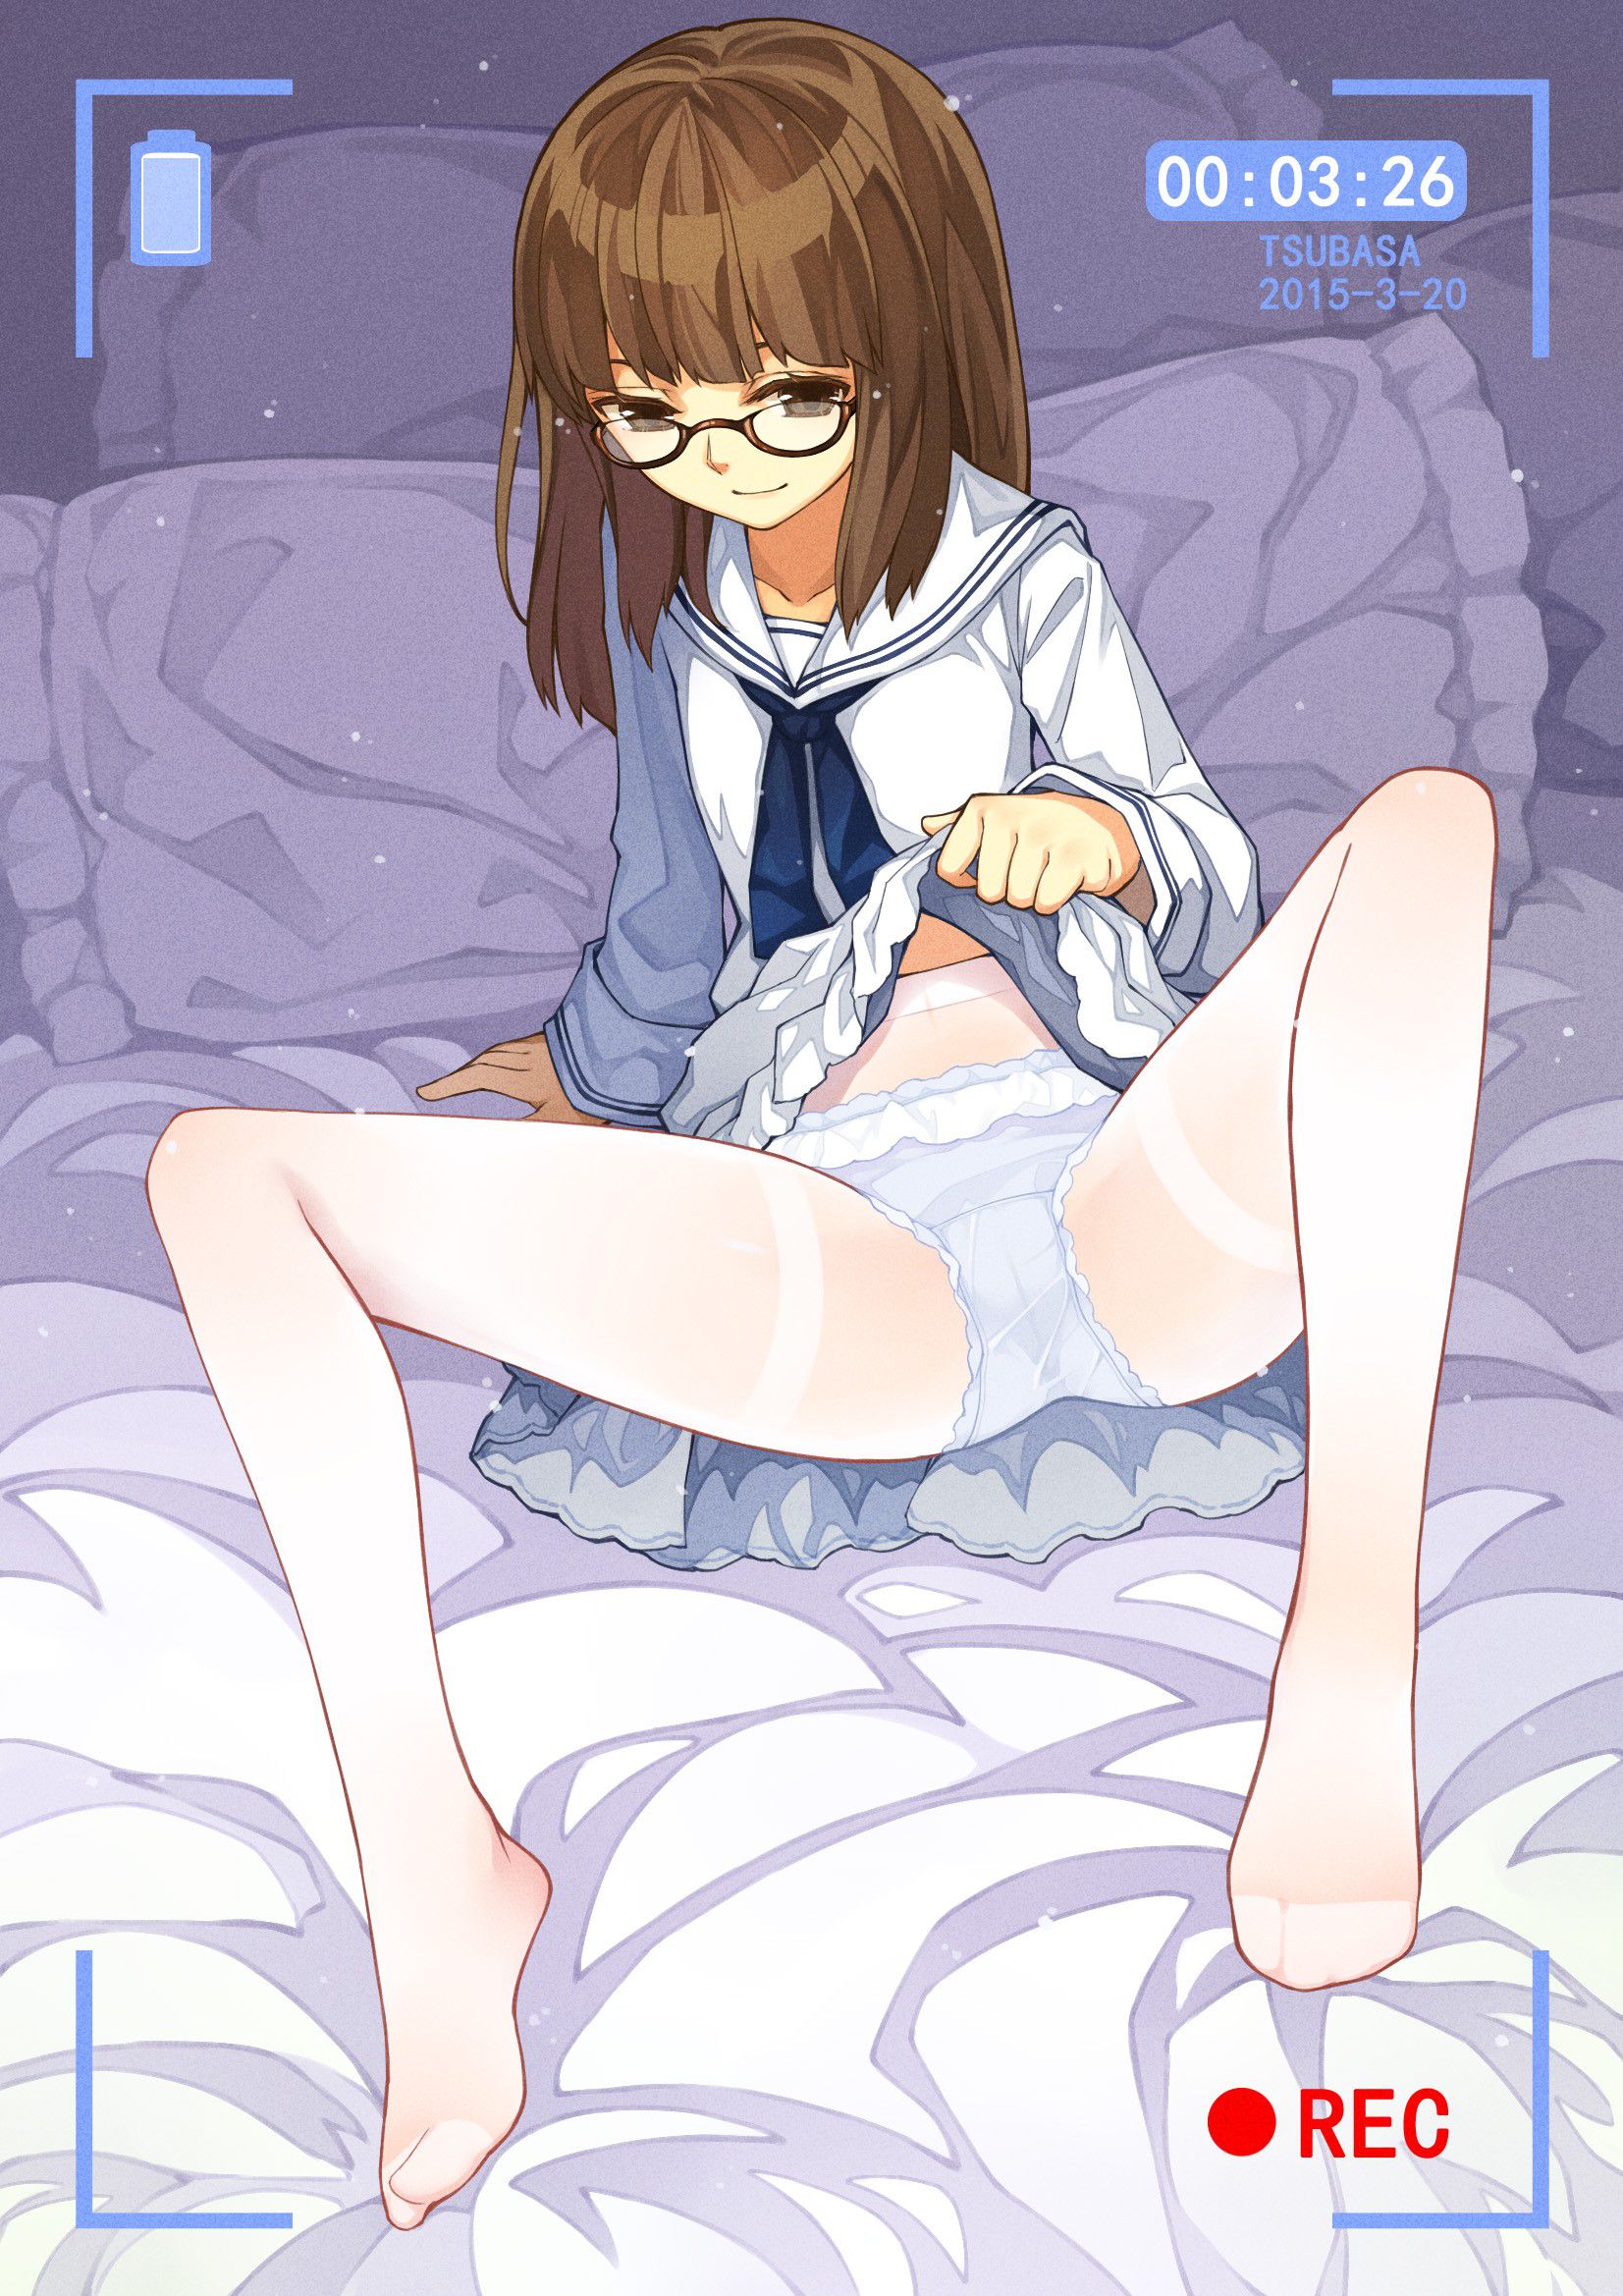 Erotic anime summary Erotic image that neat girls wearing glasses do too erotic [secondary erotic] 31